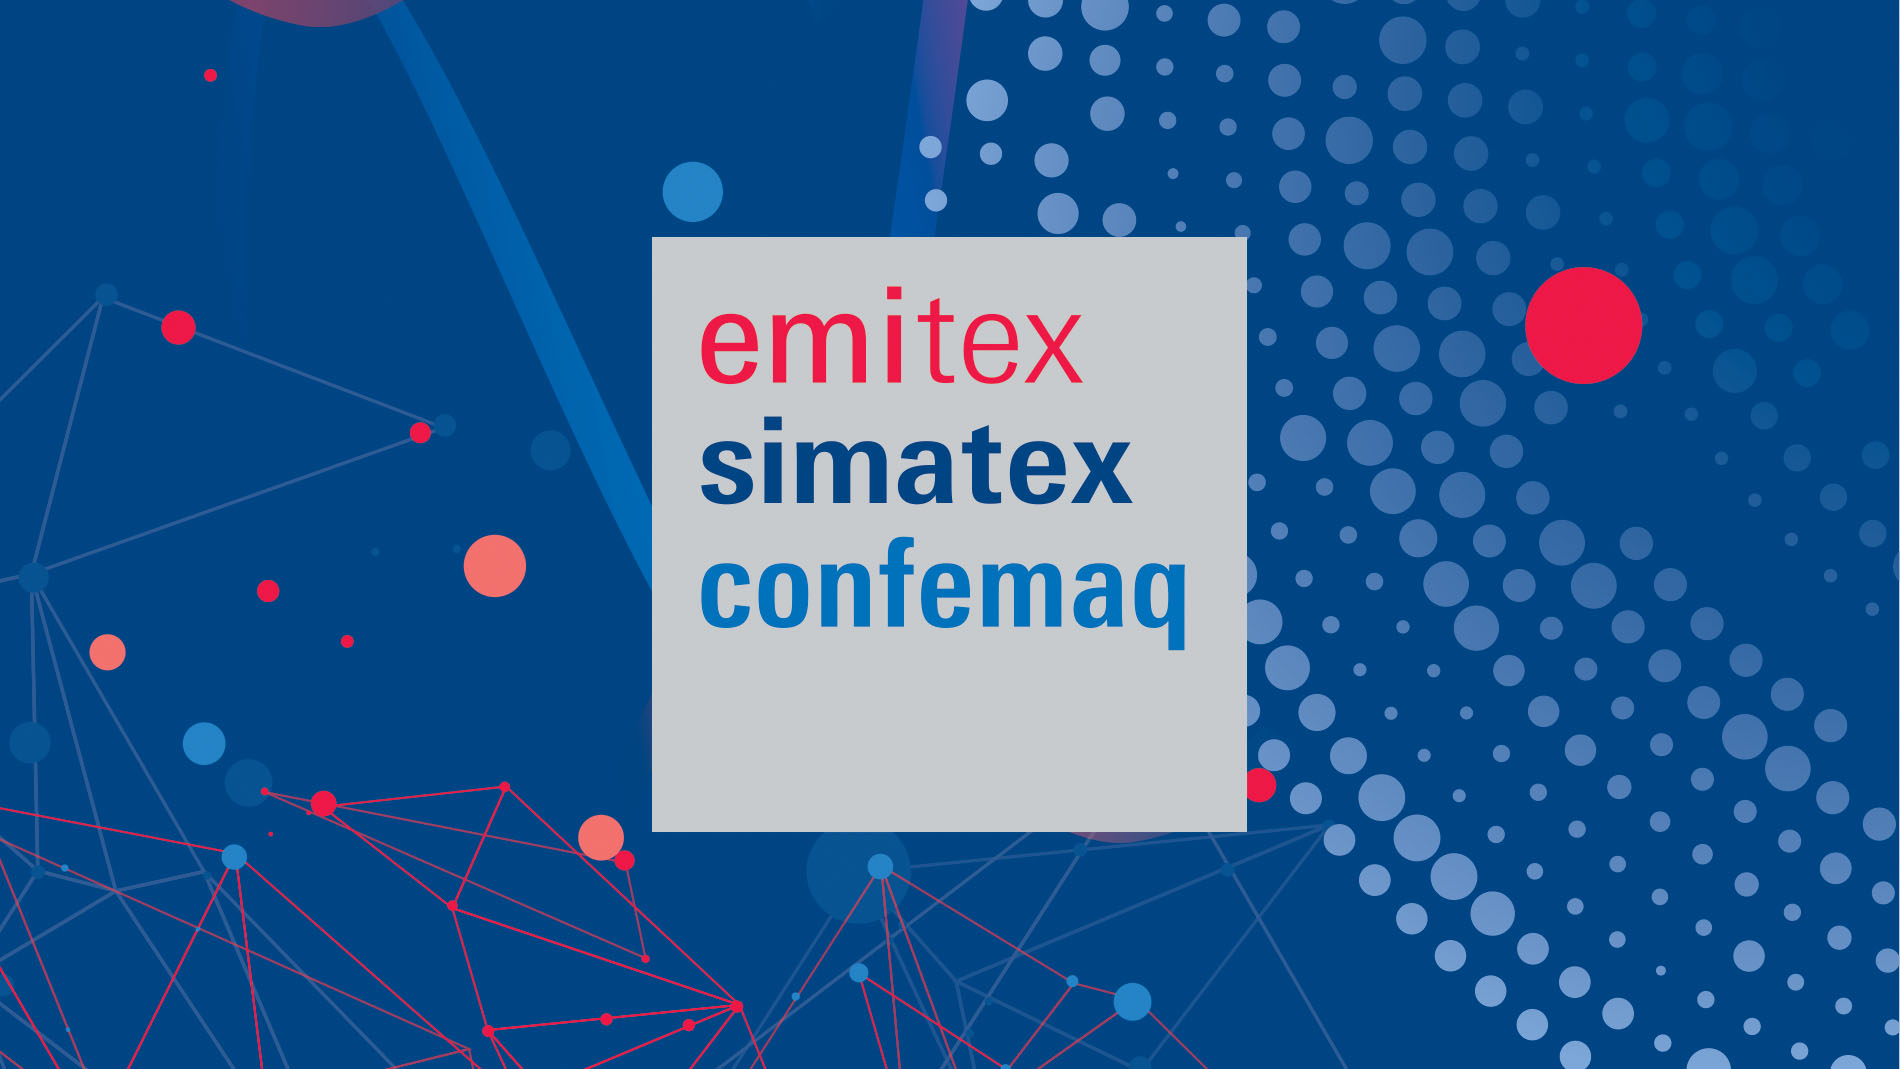 Emitex, Simatex and Confemaq